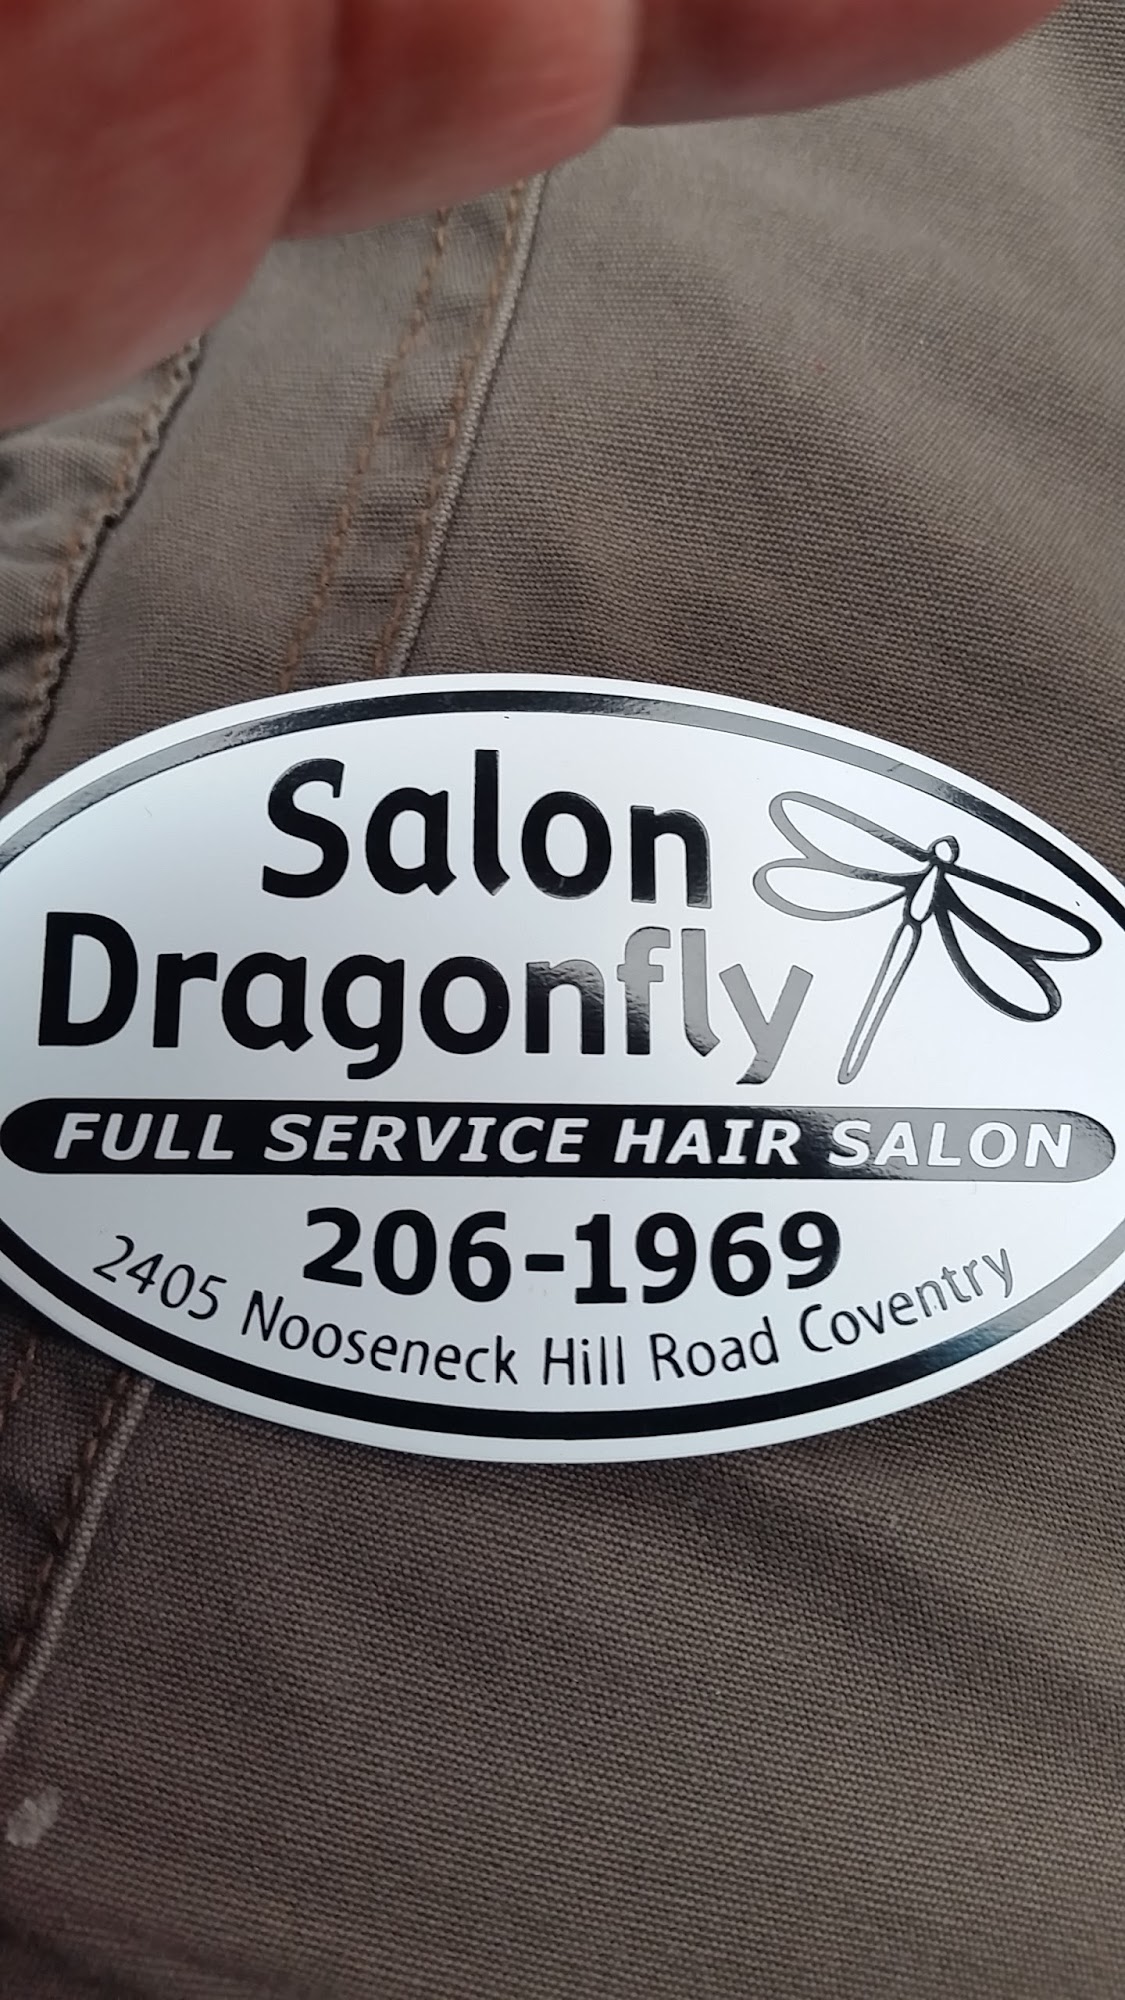 Salon Dragonfly